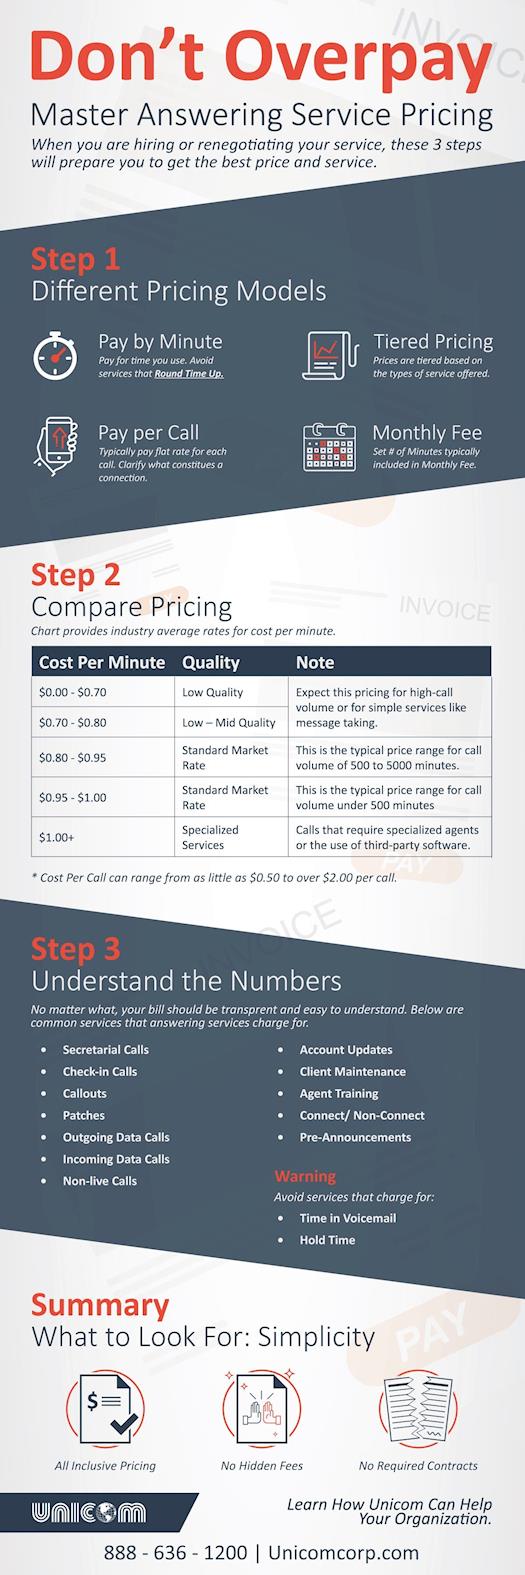 Unicom Answering Service Pricing